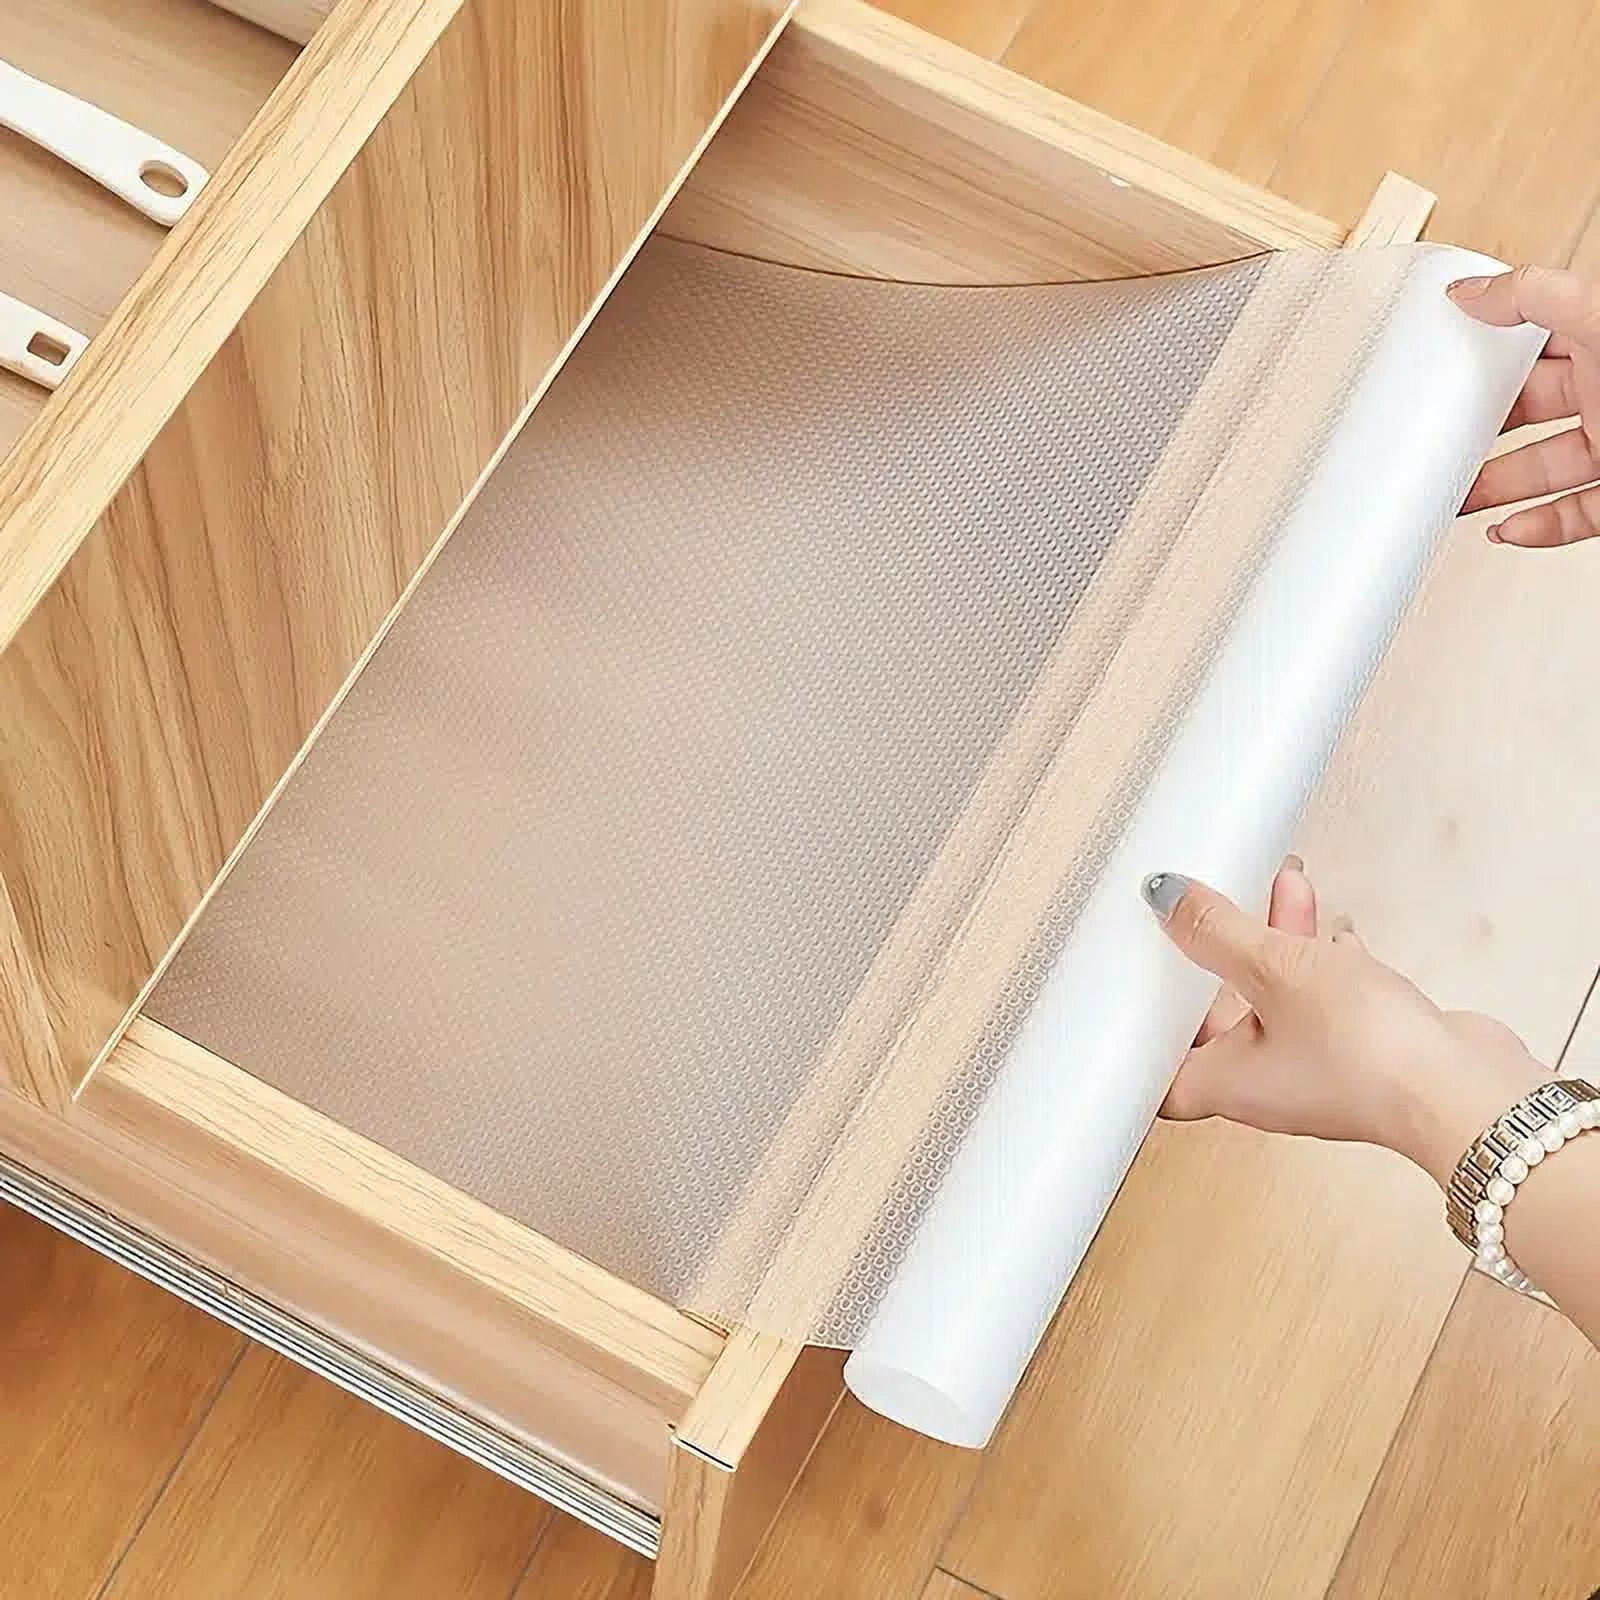 Non-slip Shelf Liner Non-adhesive Eva Kitchen Liner Durable Strong